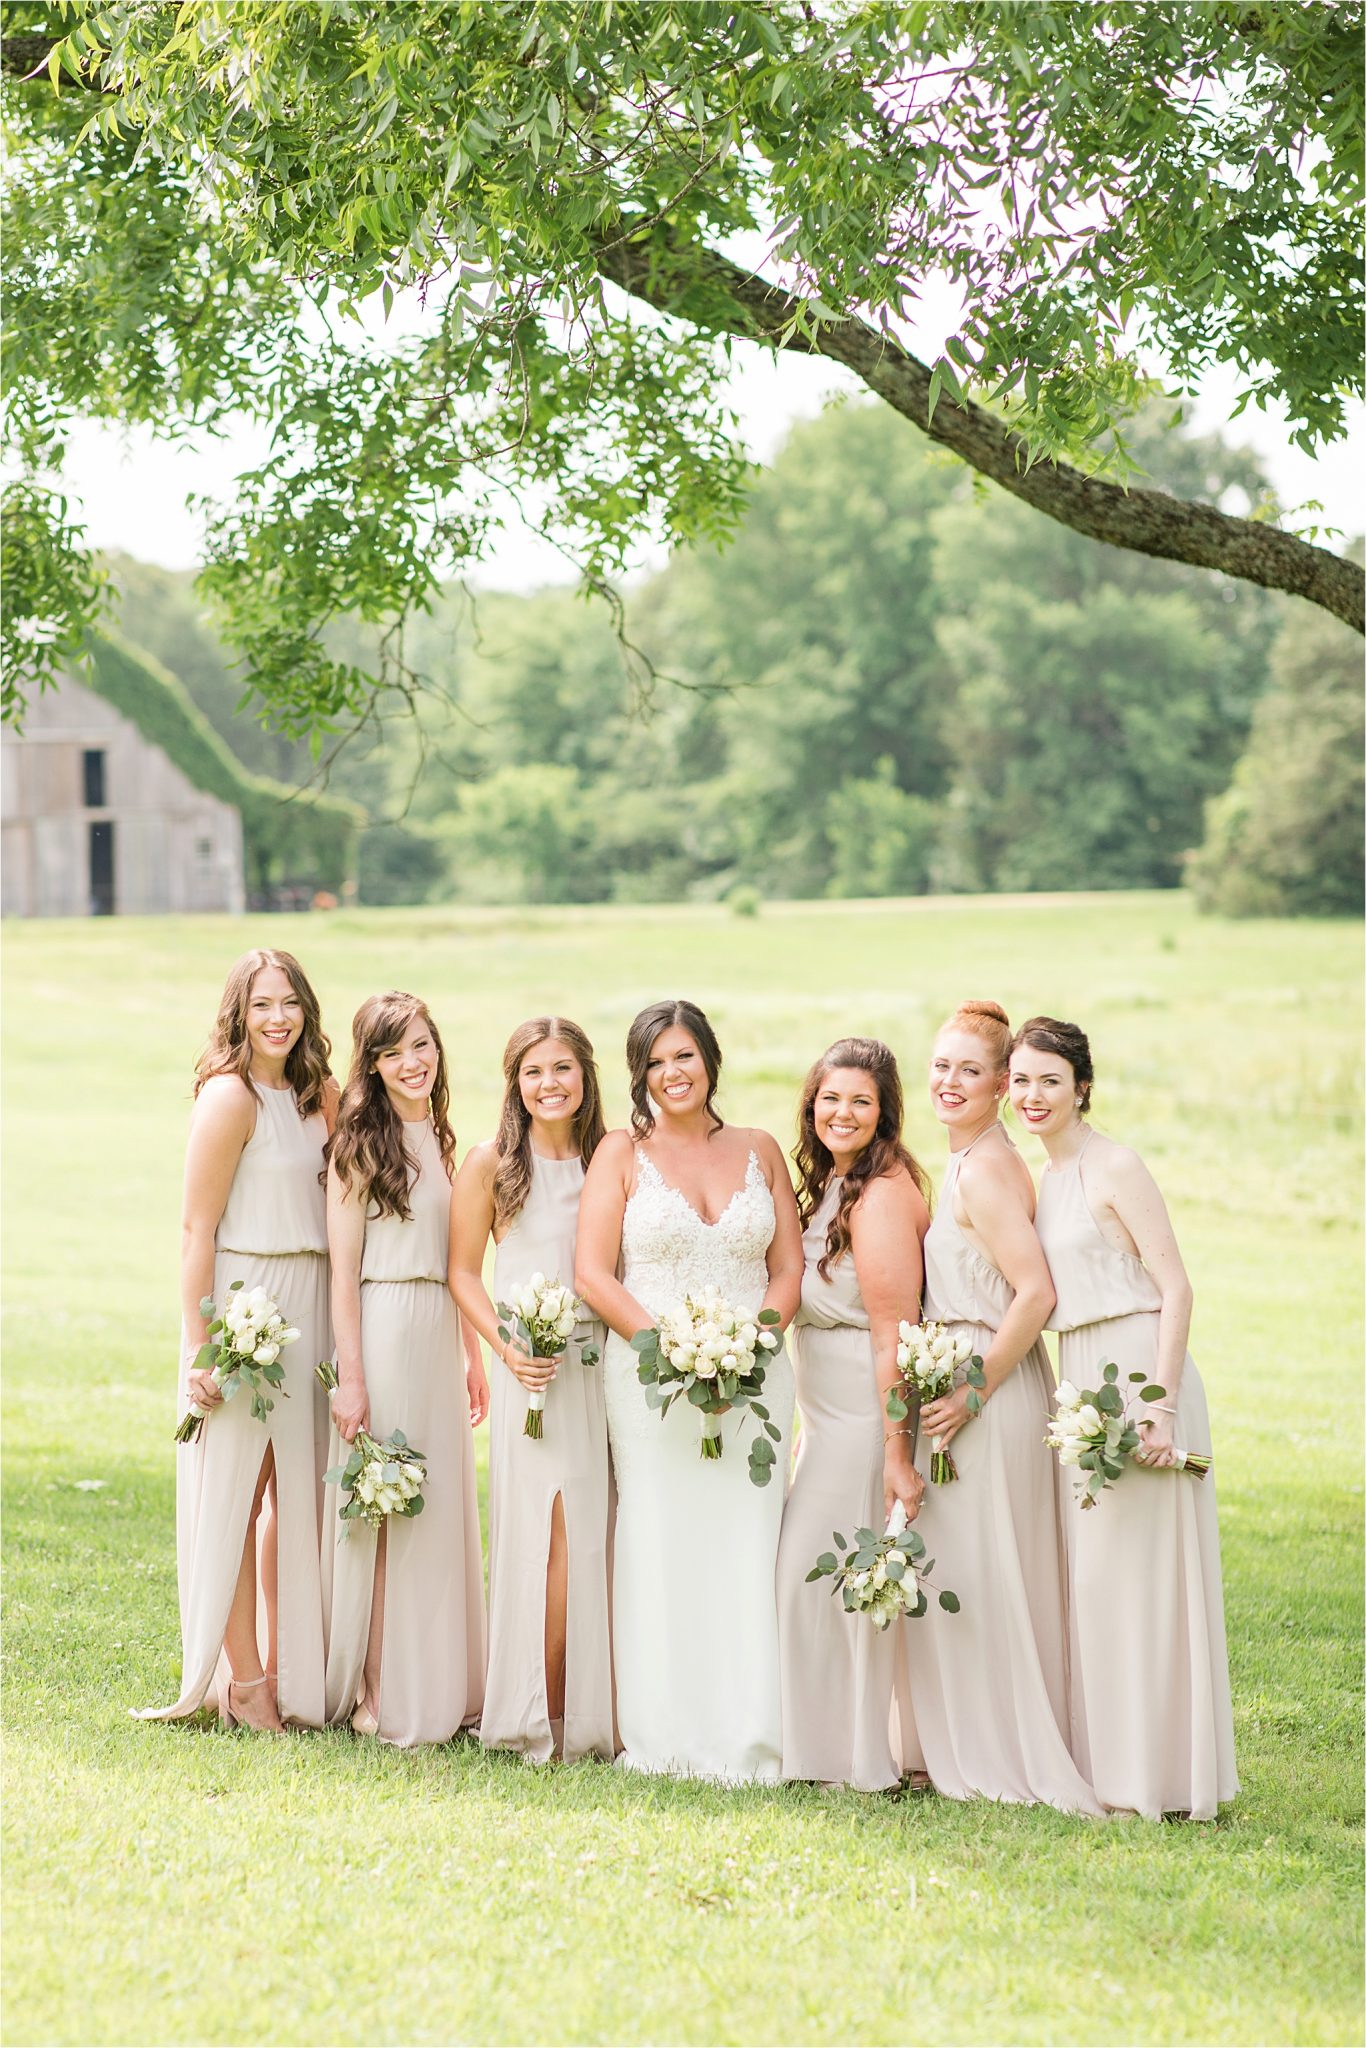 HHedge Farm Wedding, Alabama Wedding Photographer, Barn Wedding, Bride and bridesmaids, Neutrals